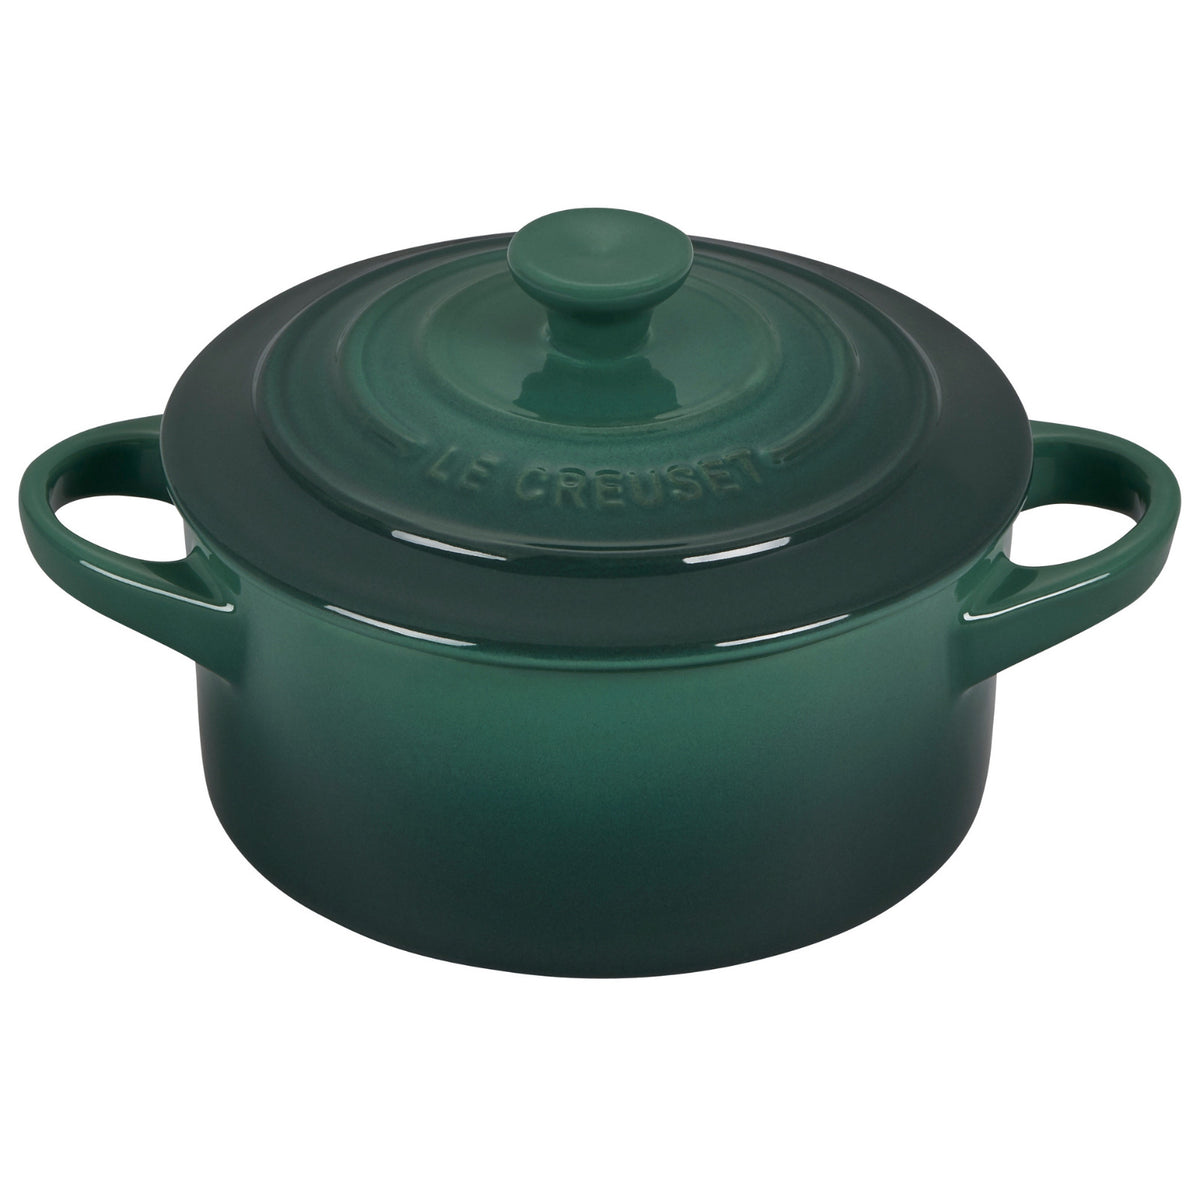 Le Creuset 3.5 Quart Emerald Green round cast iron dutch oven